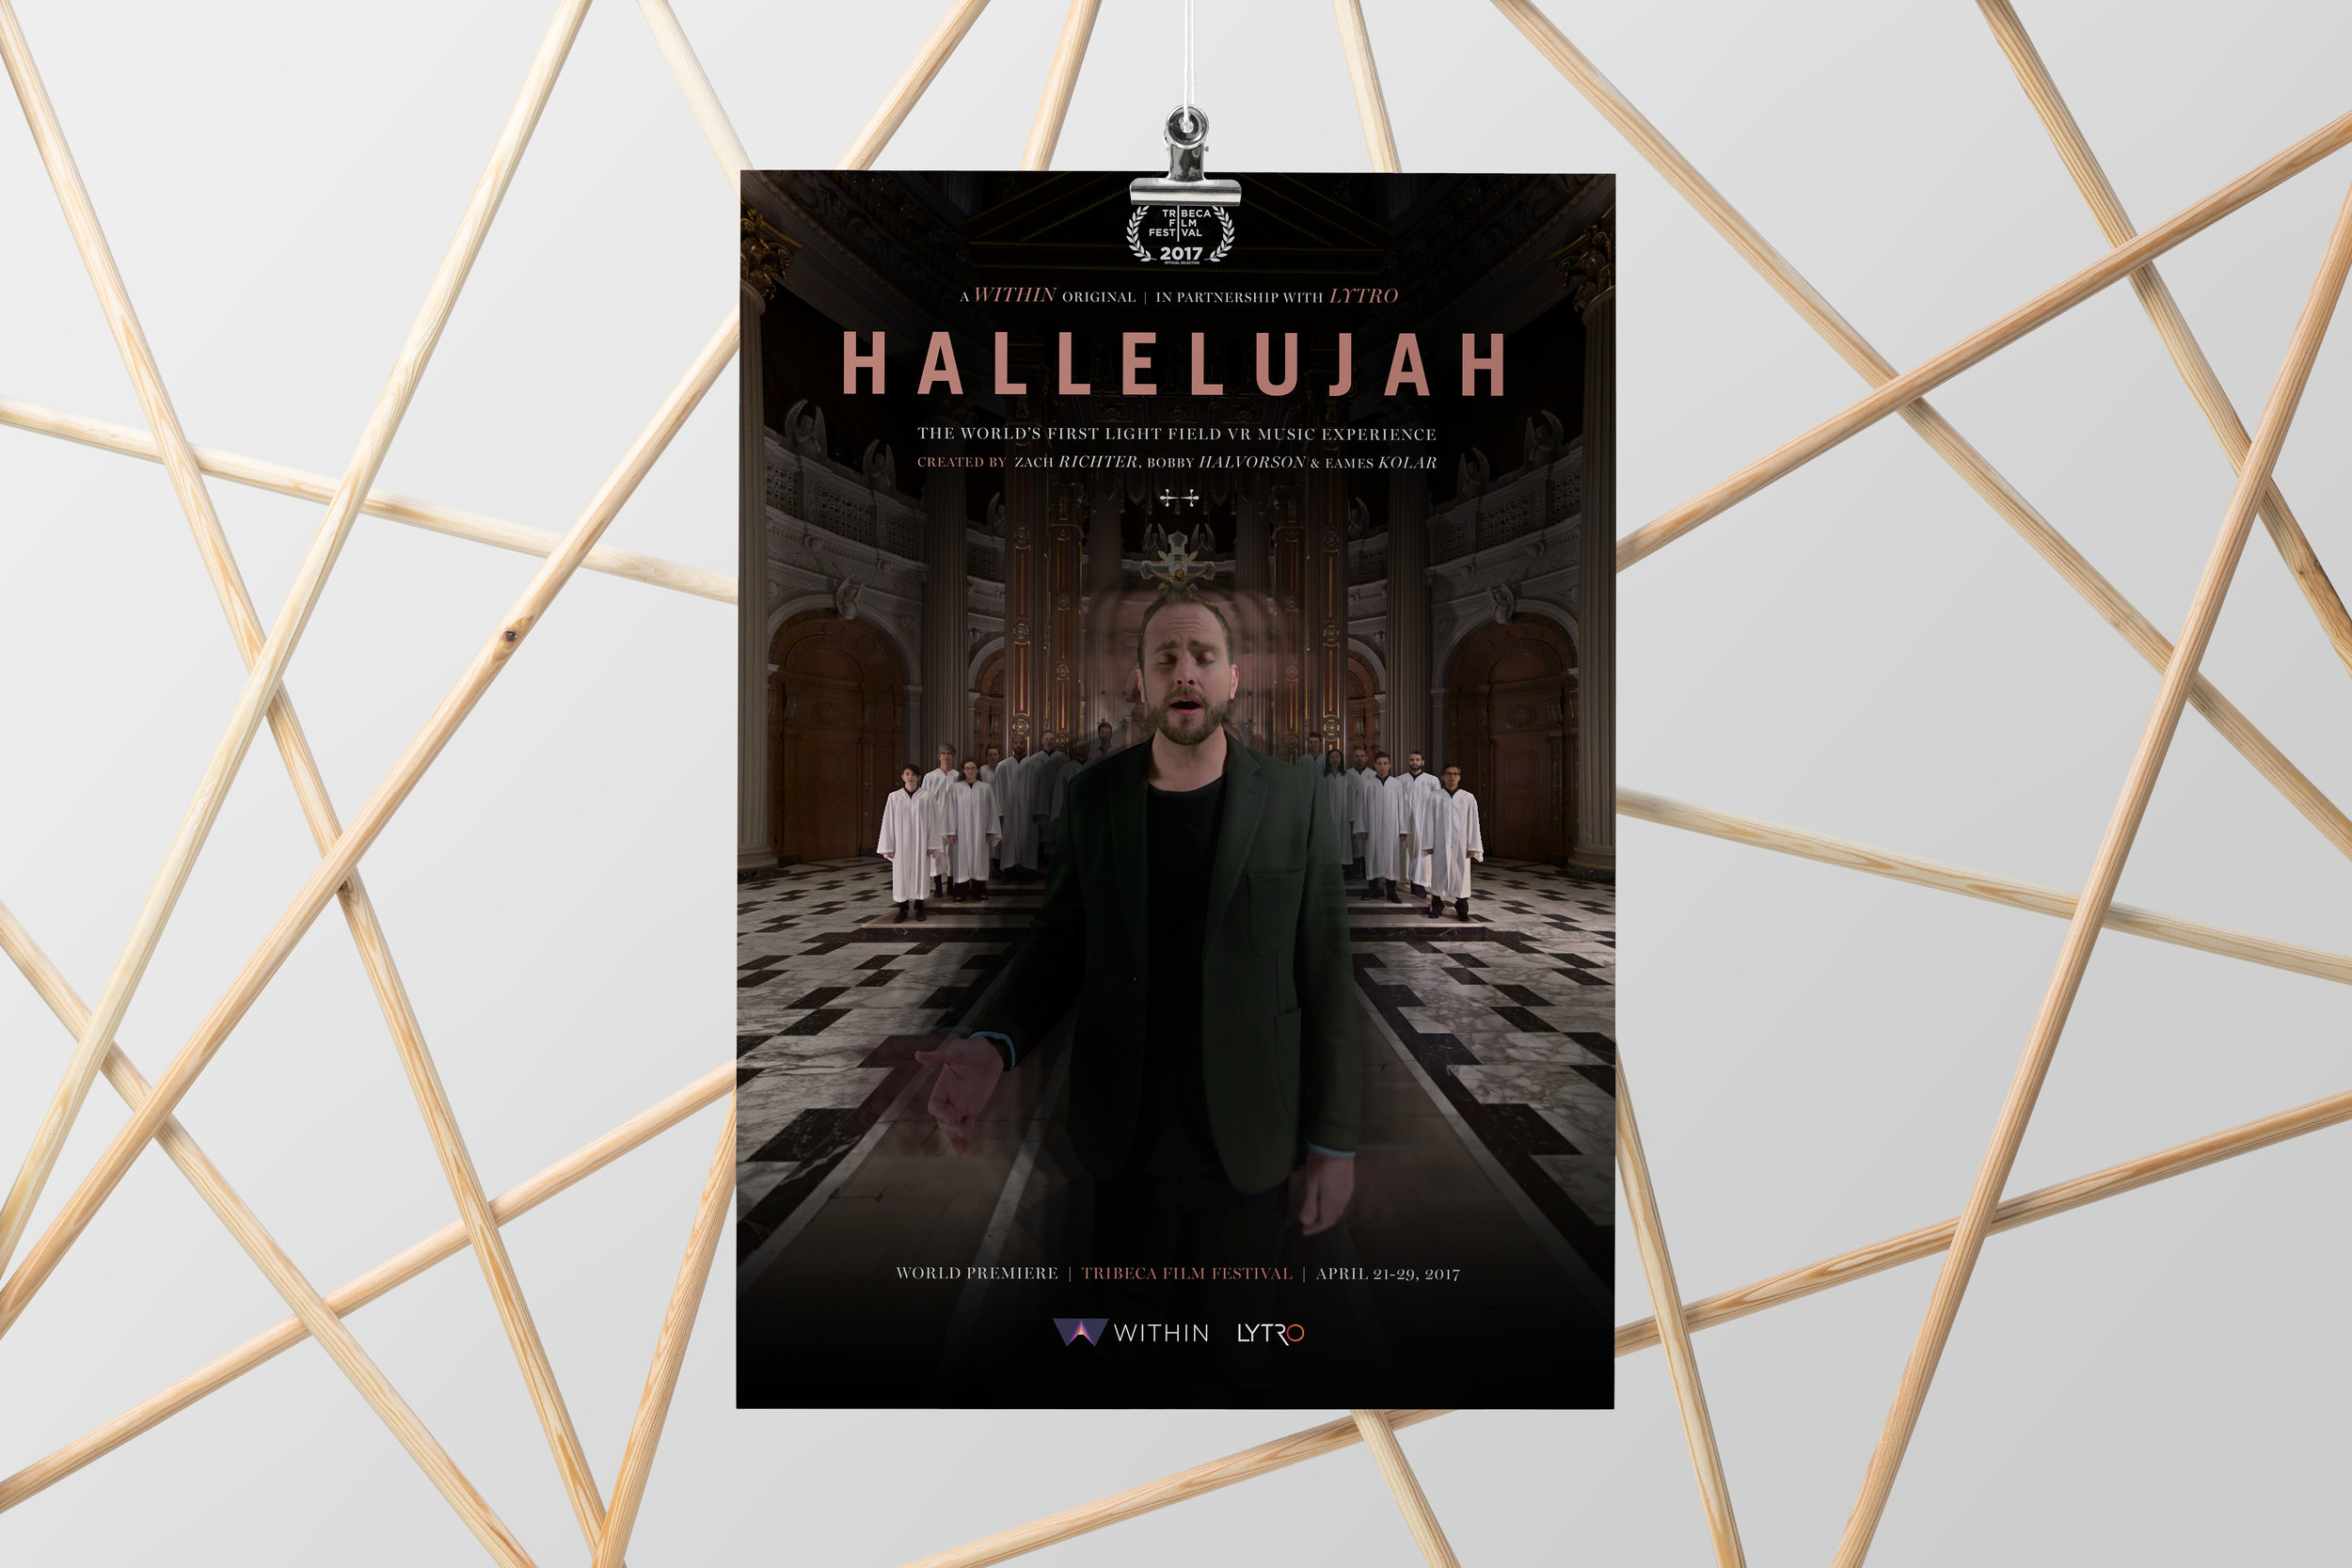   'Hallelujah' premiere poster  